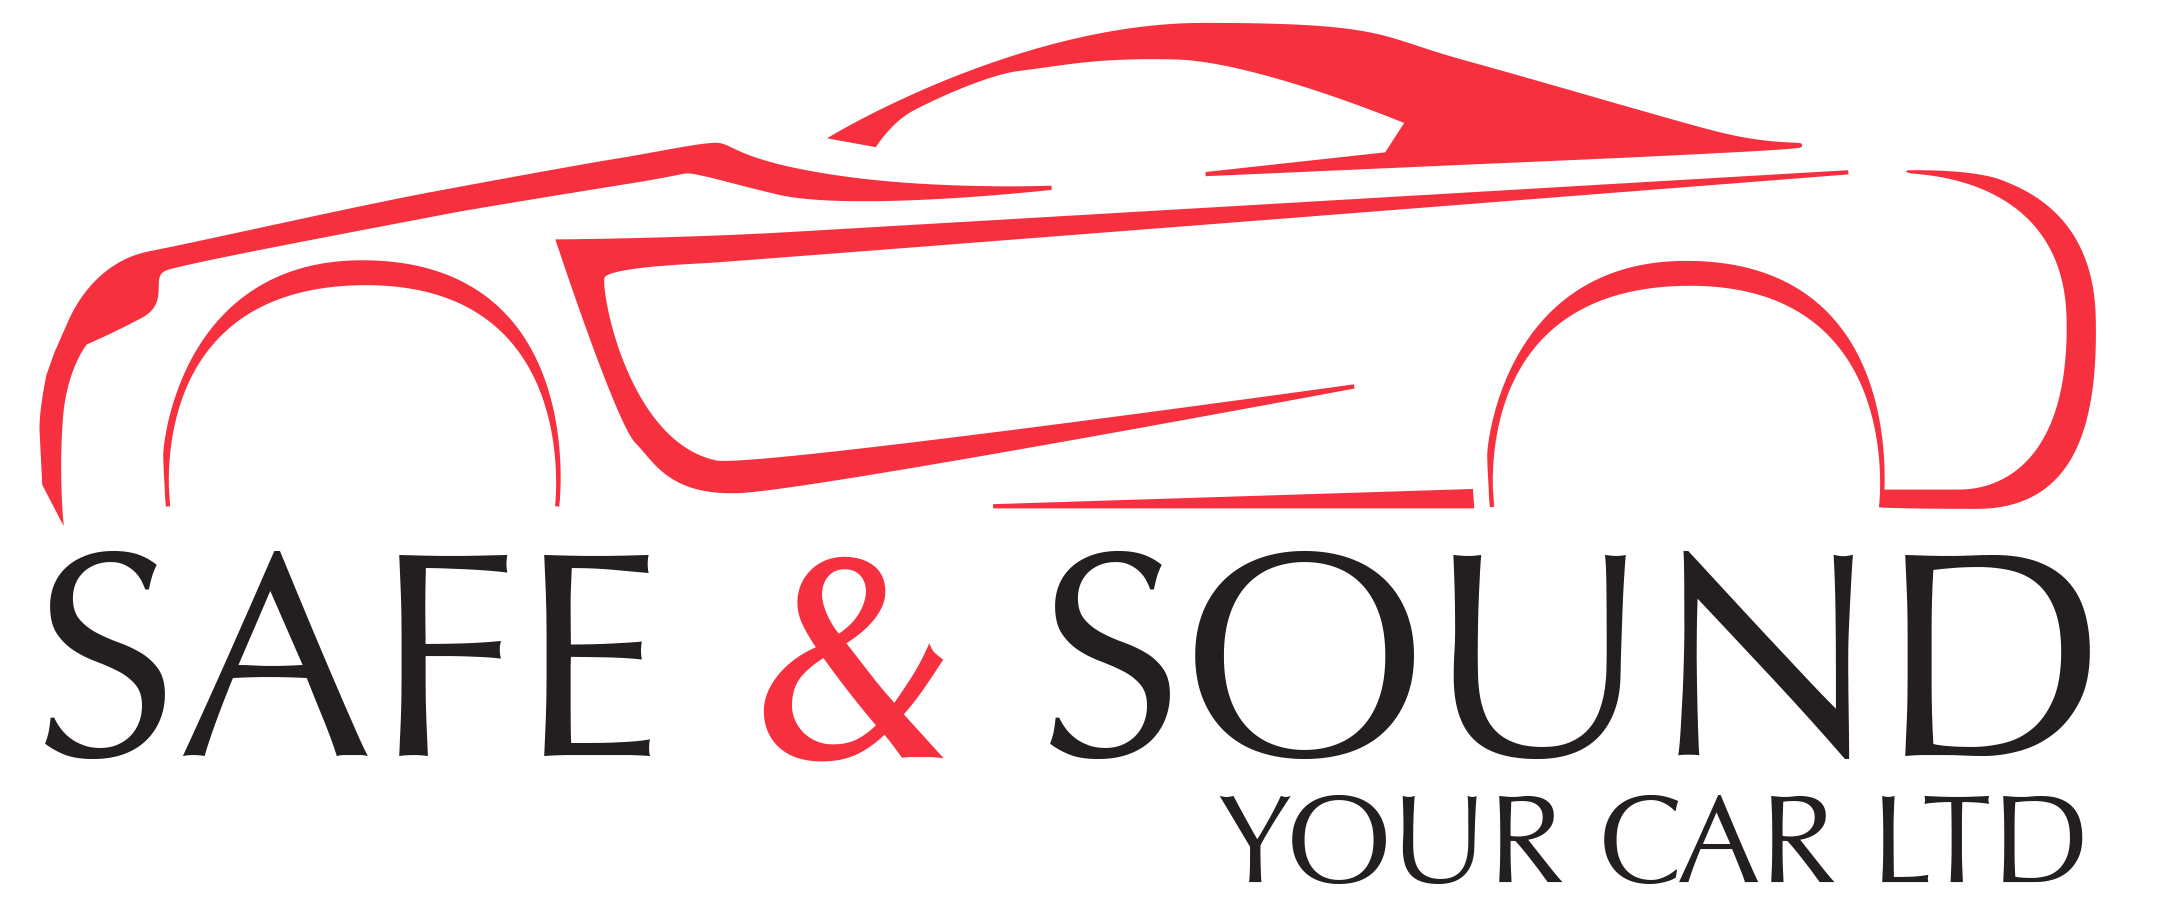 Safe & Sound Your Car Ltd